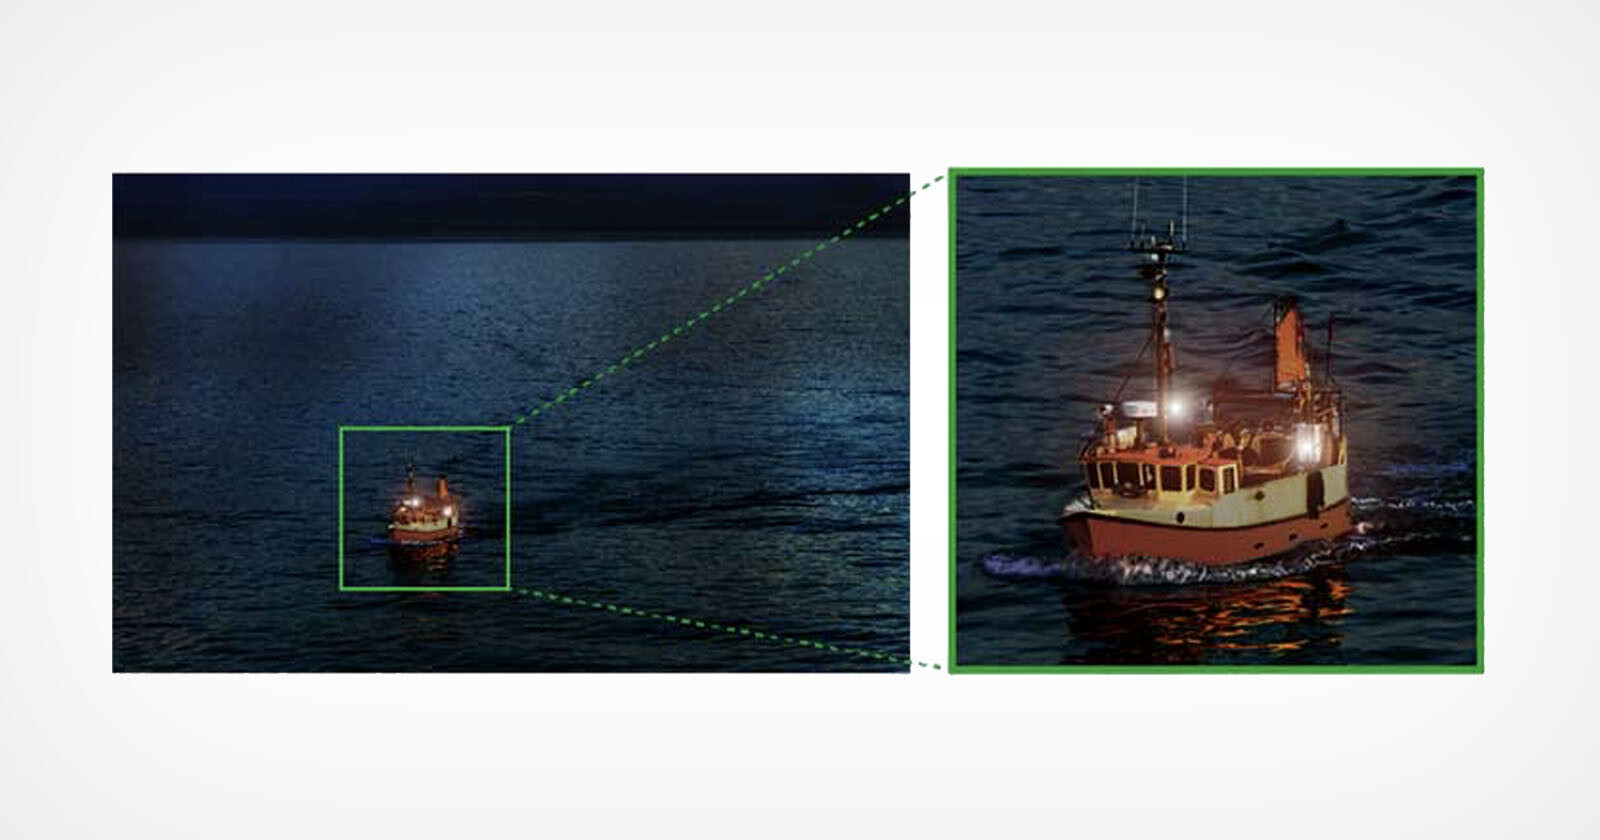  canon camera enables long-range night vision capabilities 